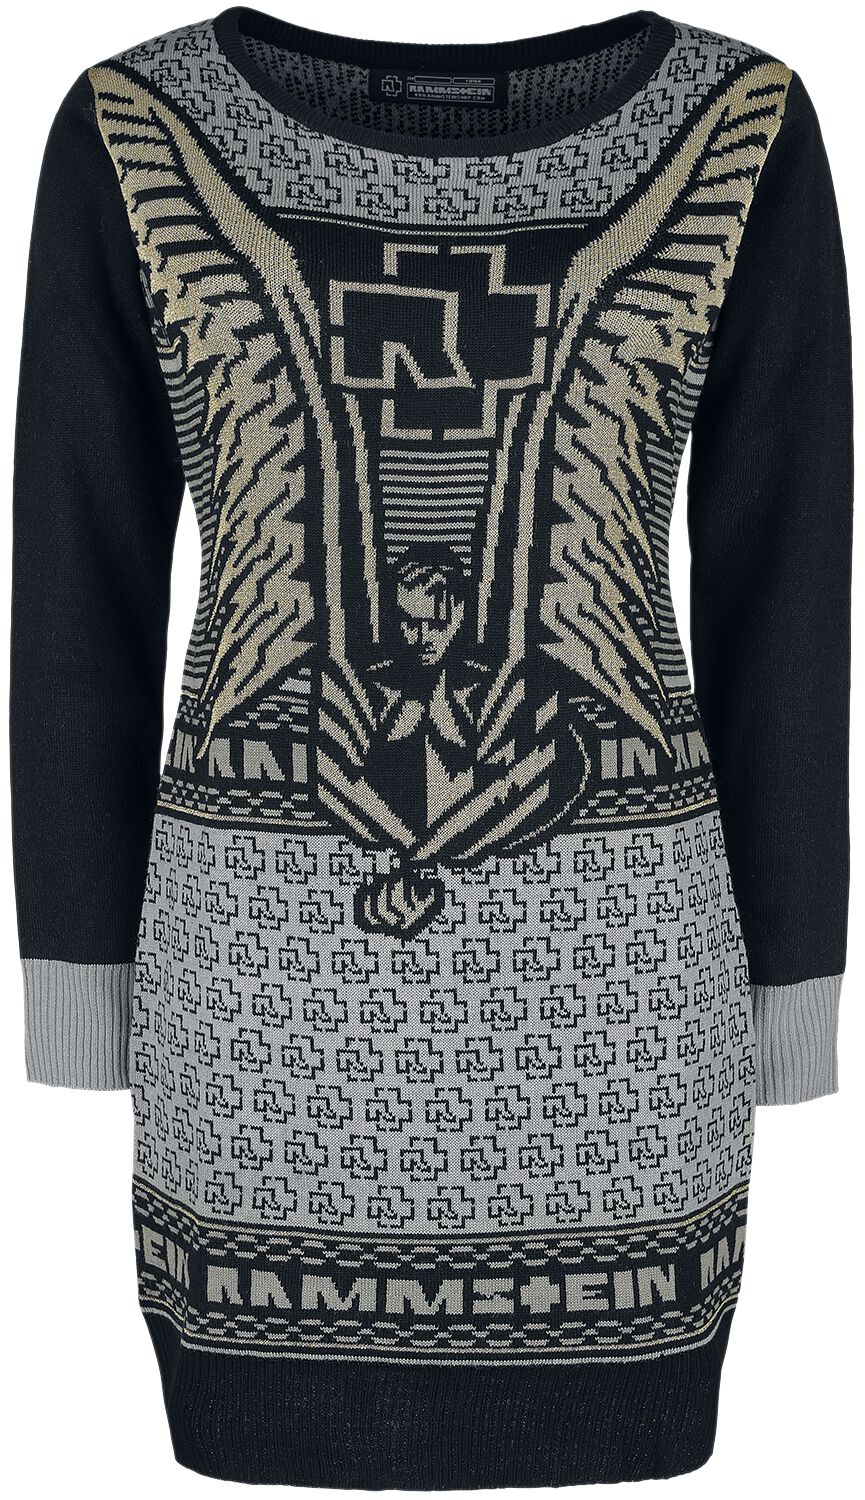 Robe mi-longue de Rammstein - Christmas Dress Gold - S à 3XL - pour Femme - noir/or